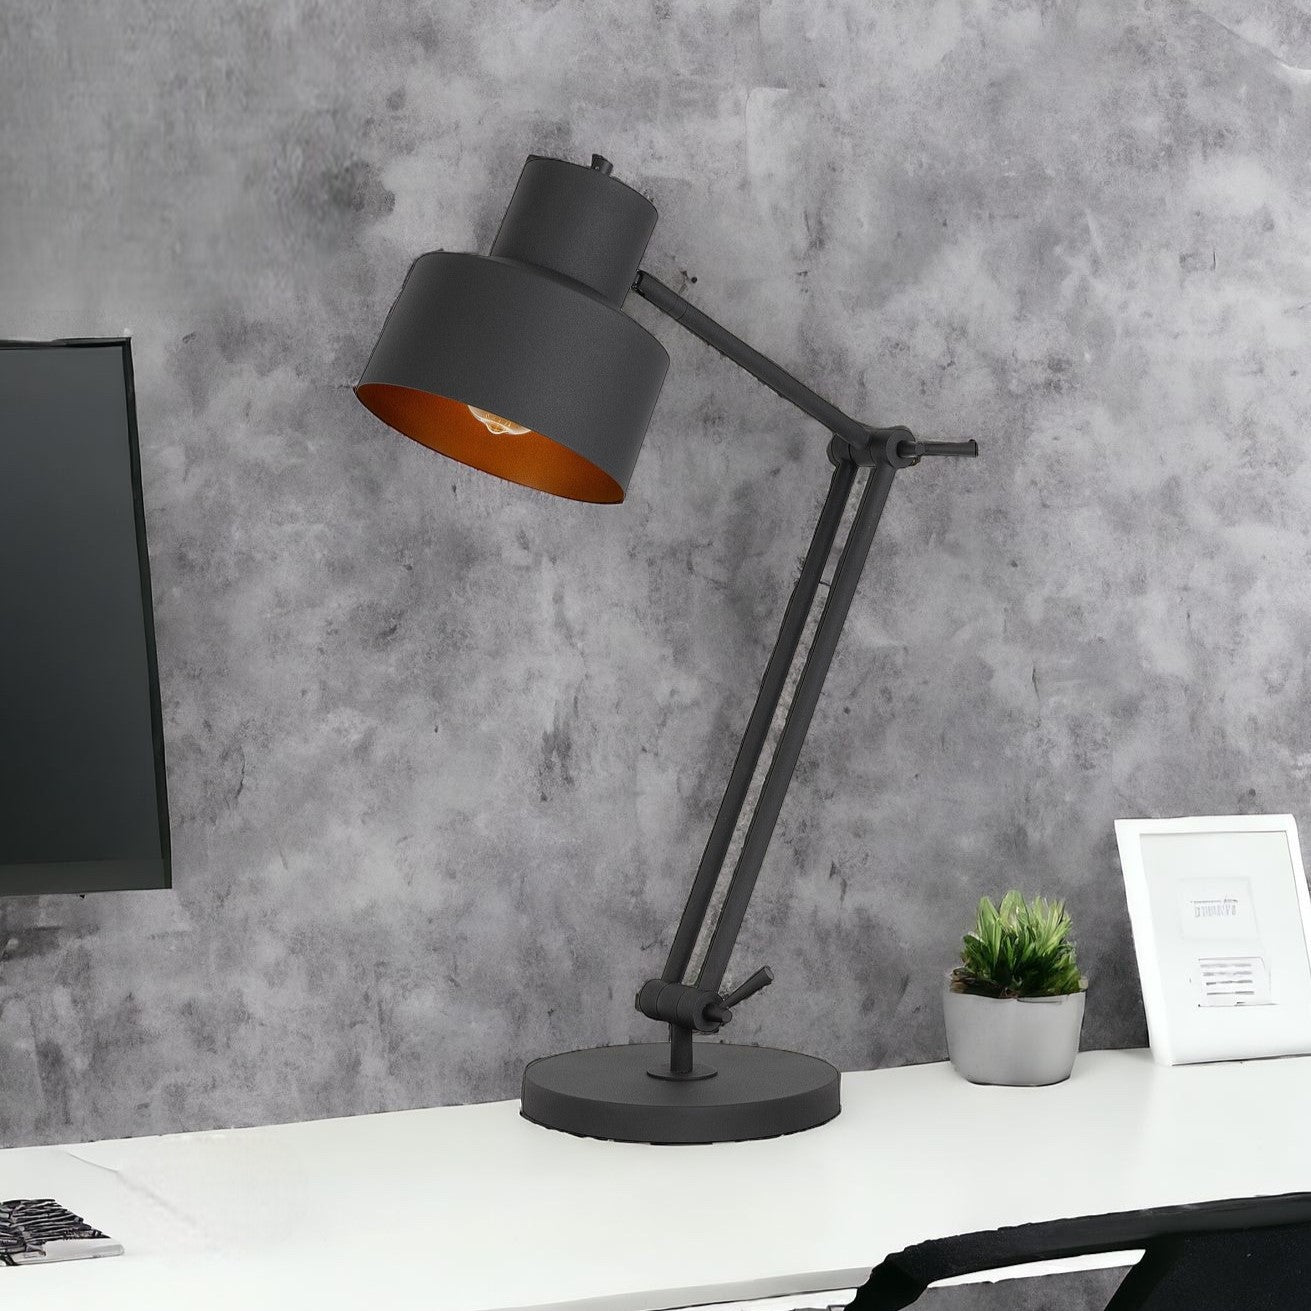 33" Black Metal Adjustable Desk Table Lamp